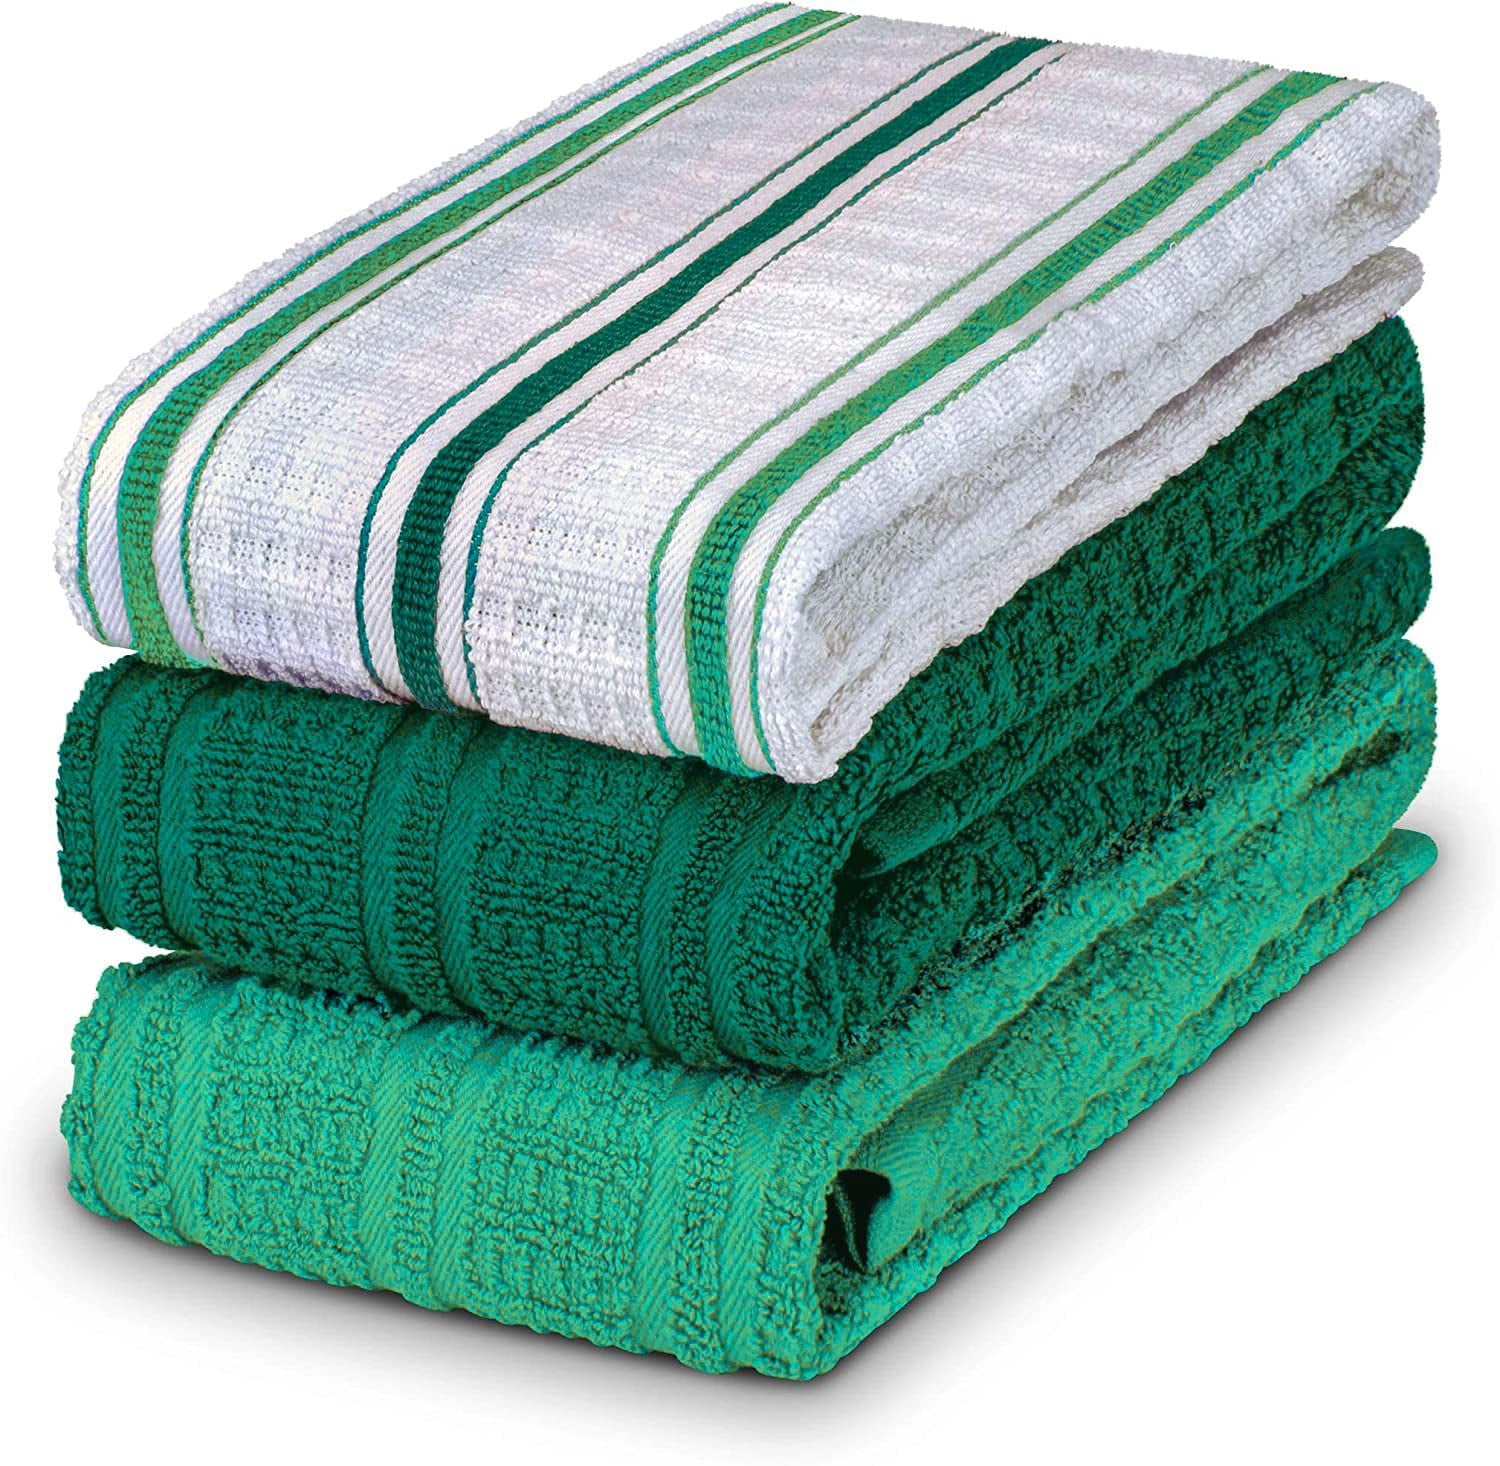 XLNT Green Large Kitchen Towels 2 Pack - 100% Cotton Dish Towels